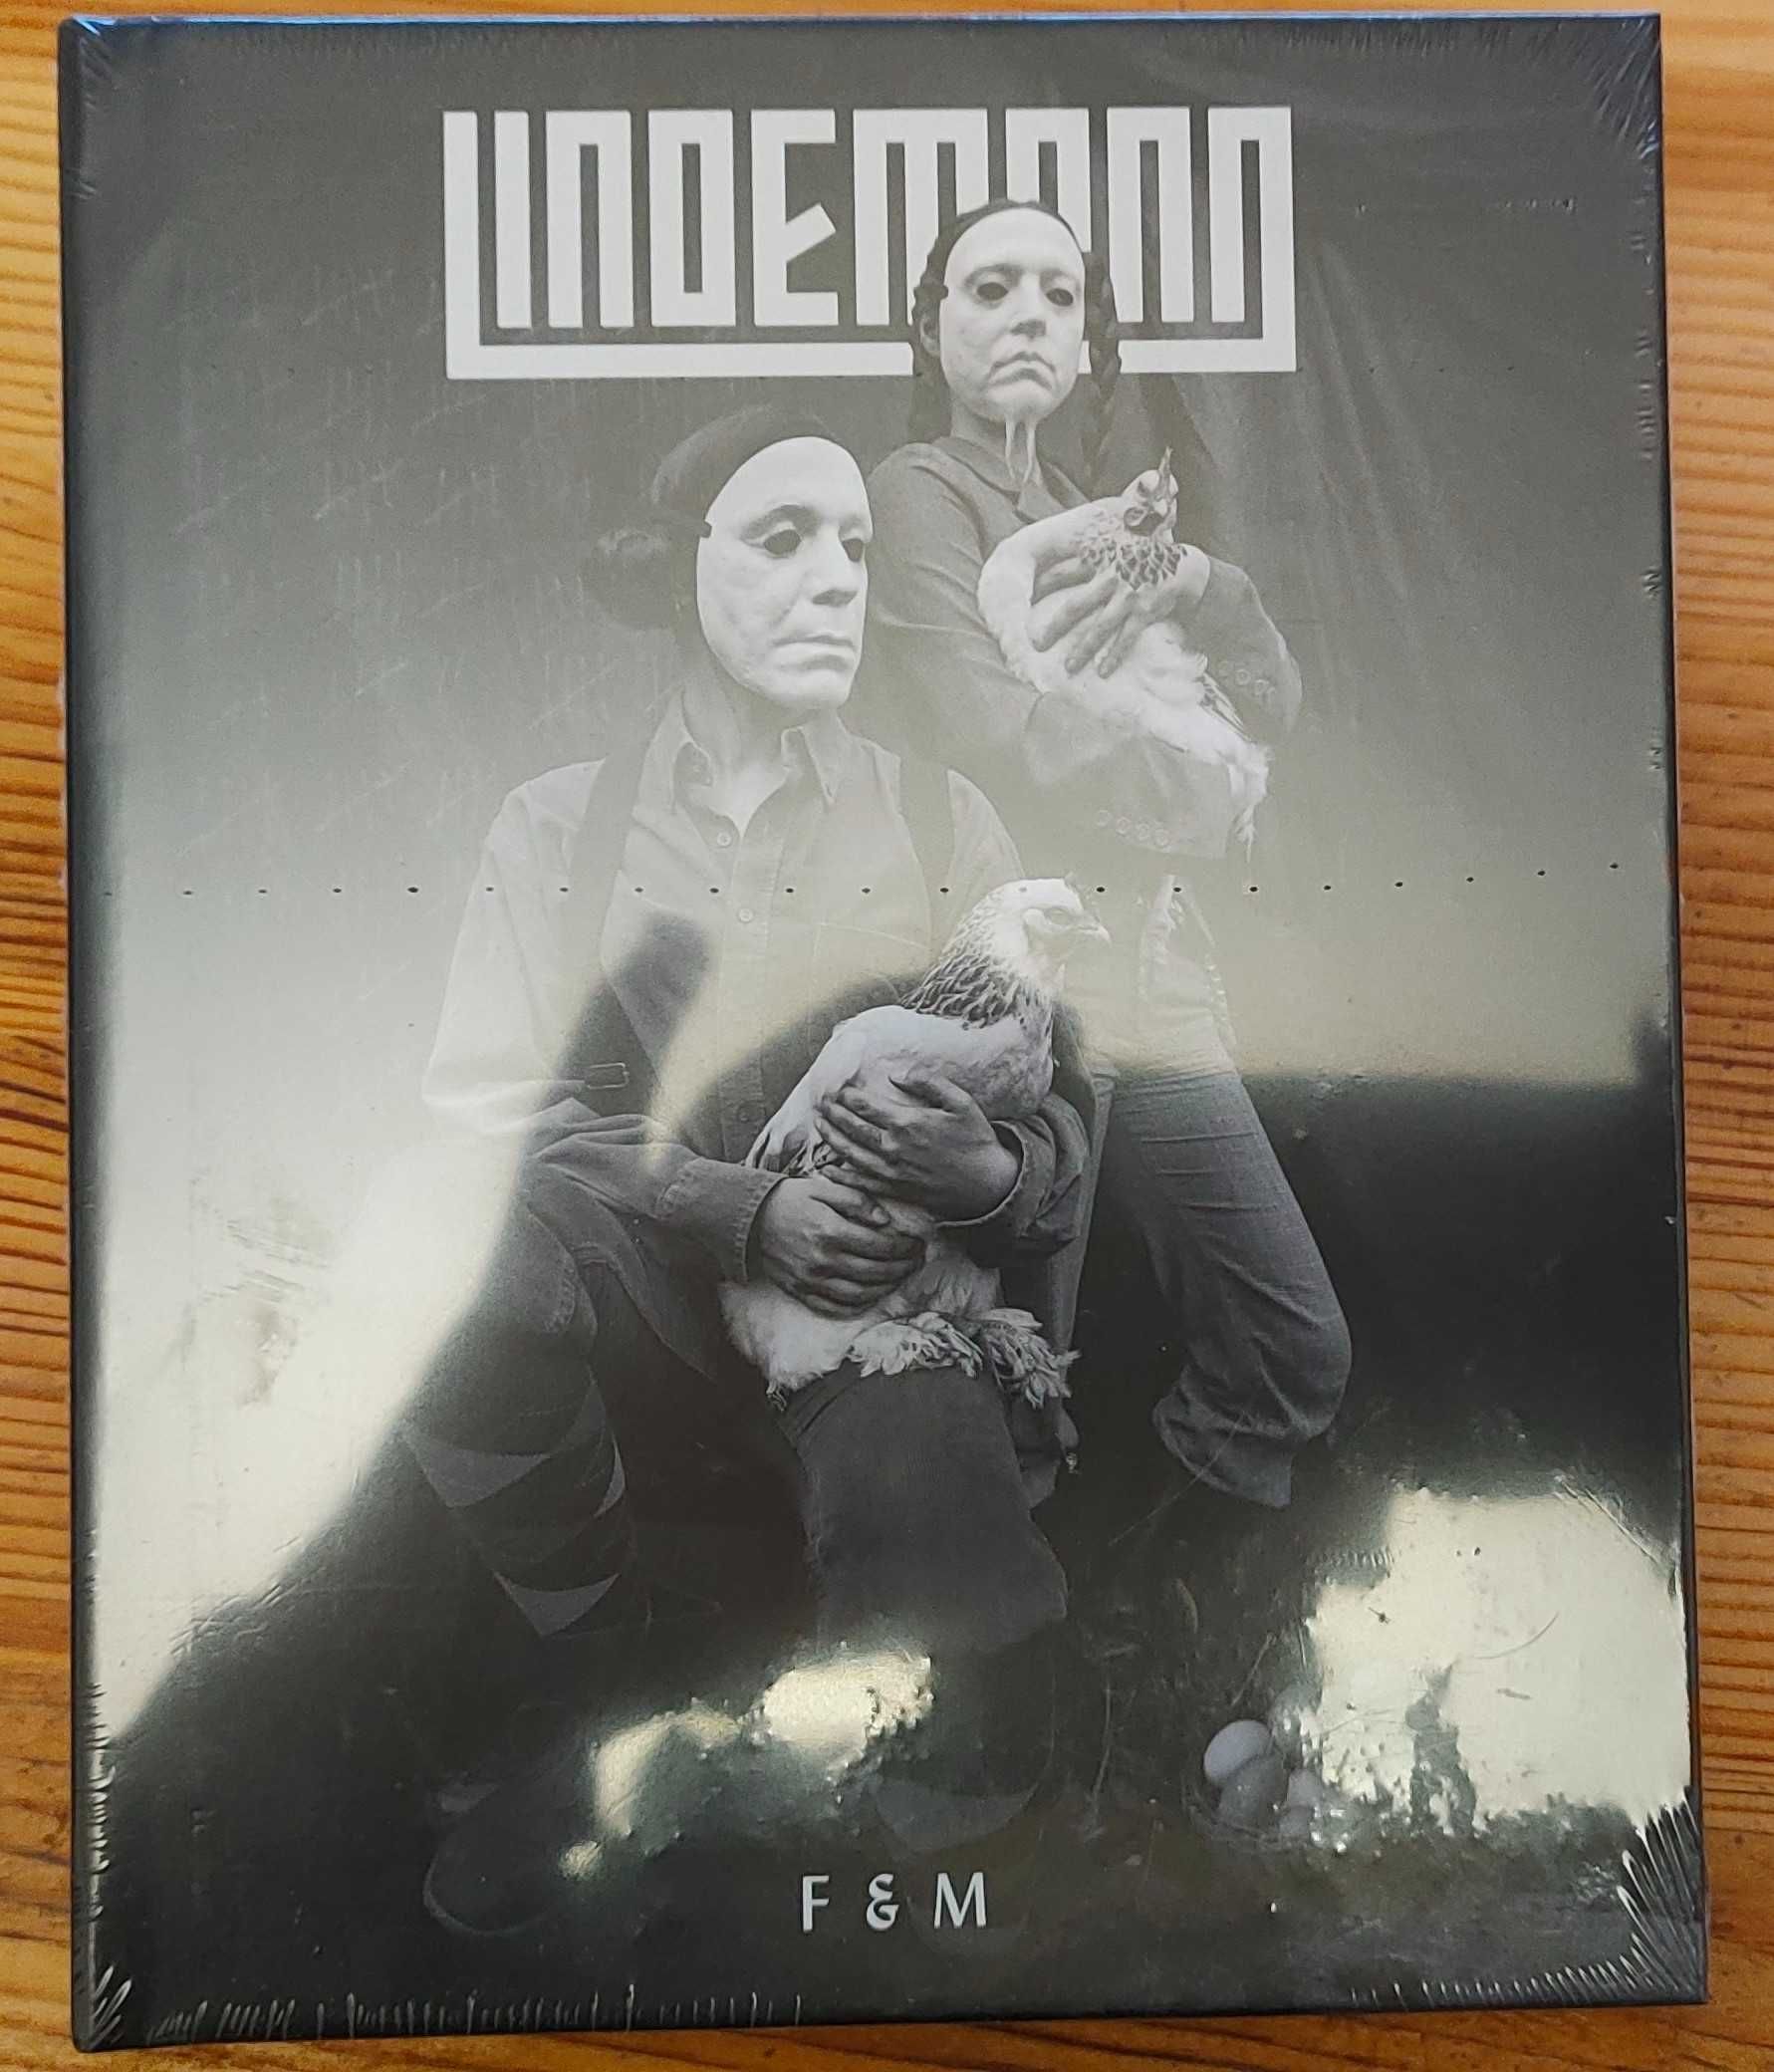 Lindemann - F&M CD(Special Edition)